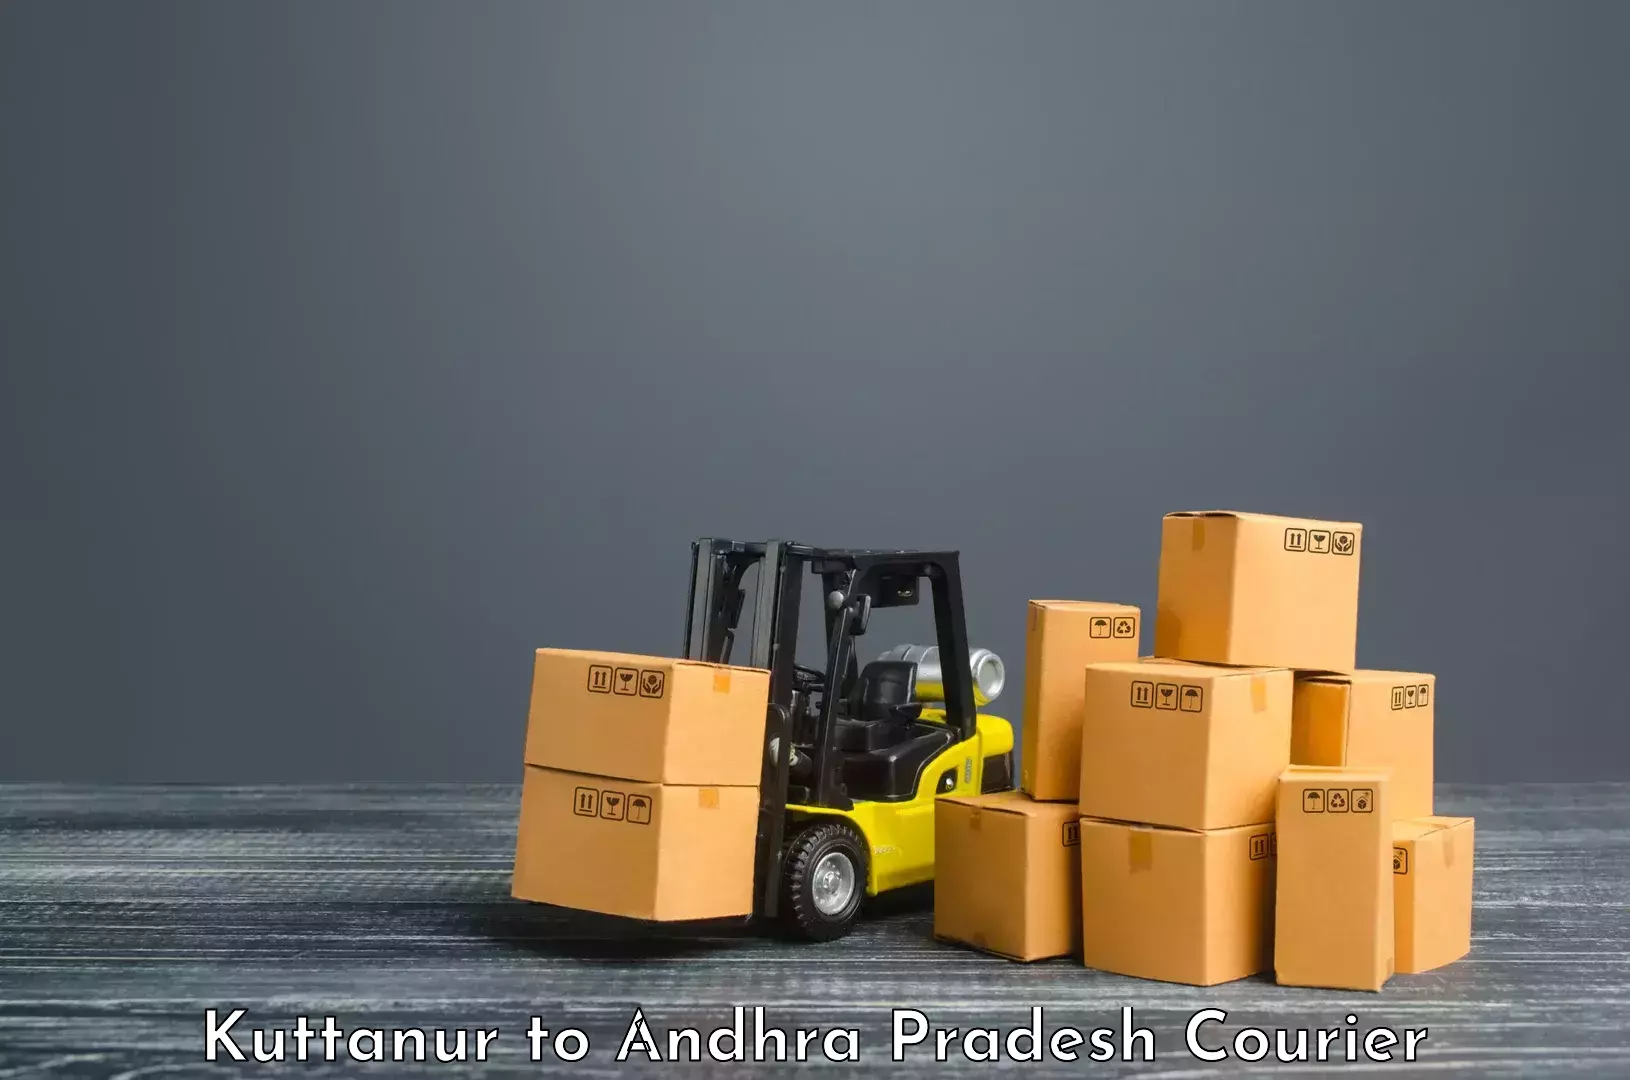 Efficient parcel tracking in Kuttanur to Kurnool